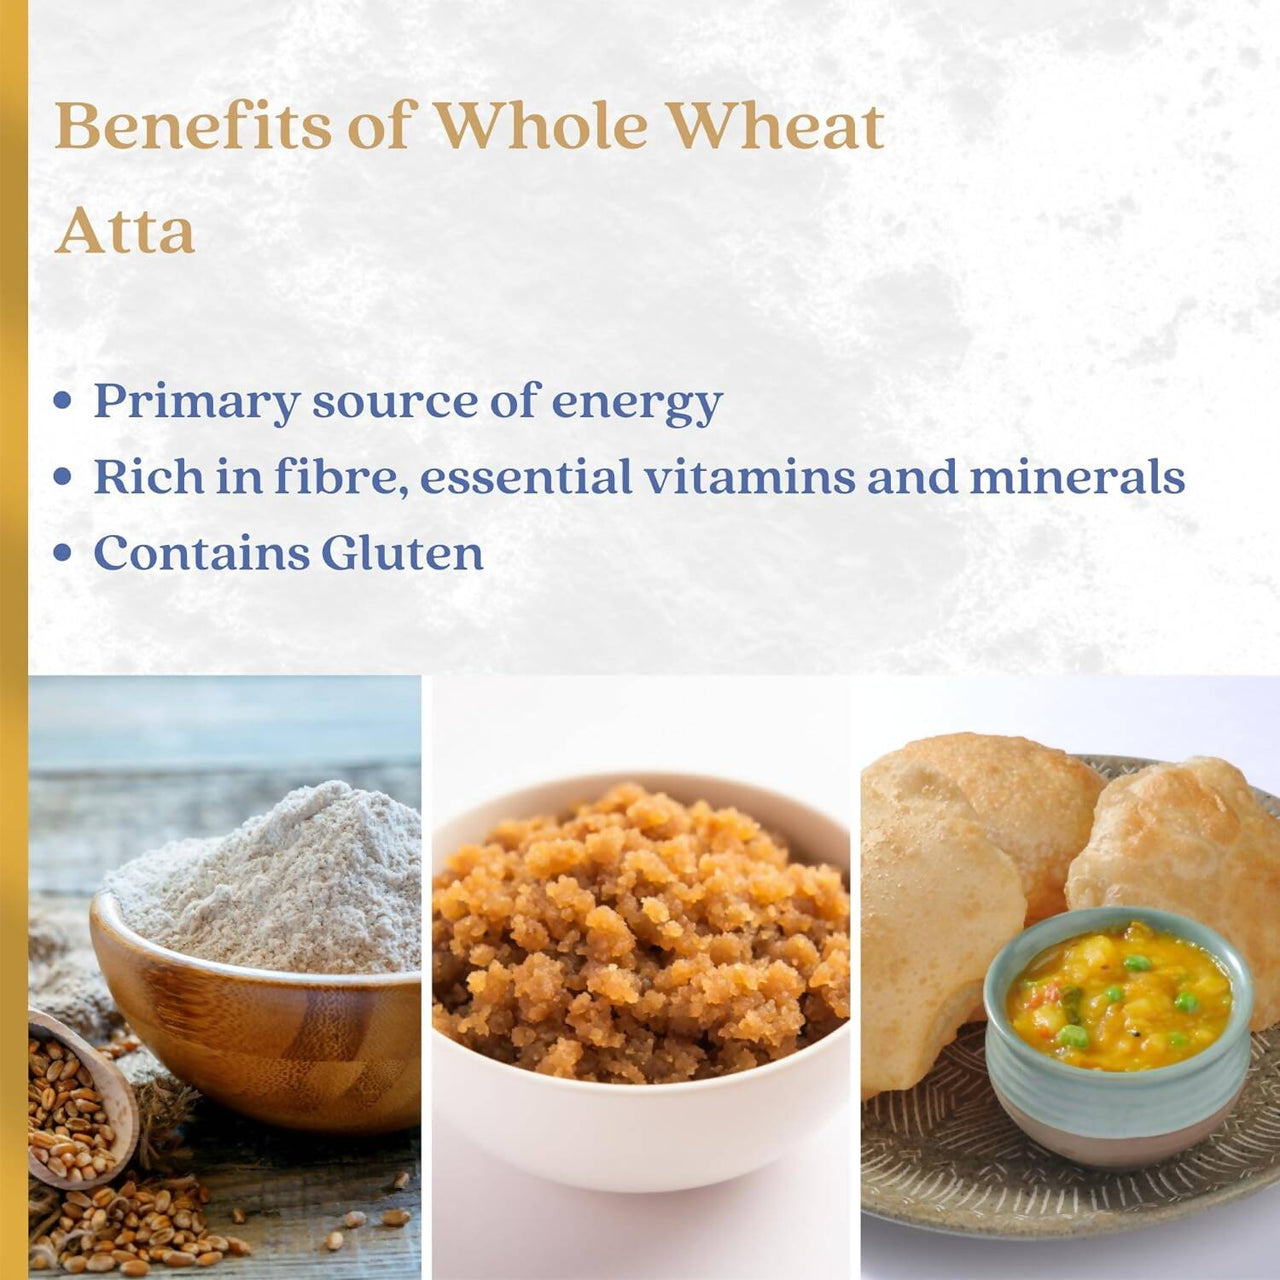 Earthen Story Certified Organic Whole Wheat Atta - Distacart